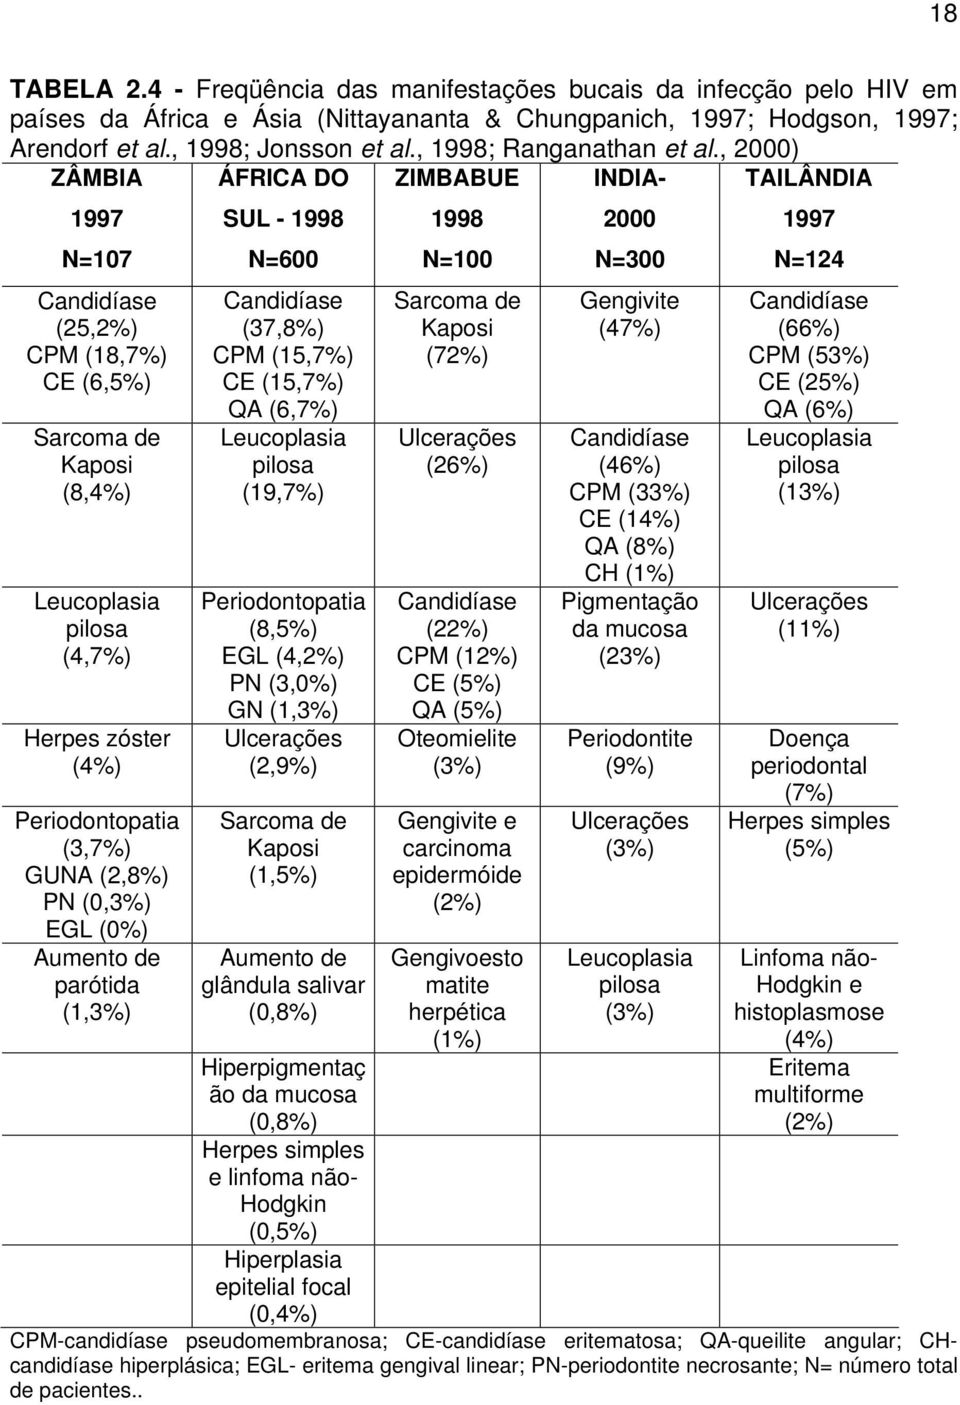 , 2000) ZÂMBIA ÁFRICA DO ZIMBABUE INDIA- TAILÂNDIA 1997 N=107 Candidíase (25,2%) CPM (18,7%) CE (6,5%) Sarcoma de Kaposi (8,4%) pilosa (4,7%) Herpes zóster (4%) Periodontopatia (3,7%) GUNA (2,8%) PN